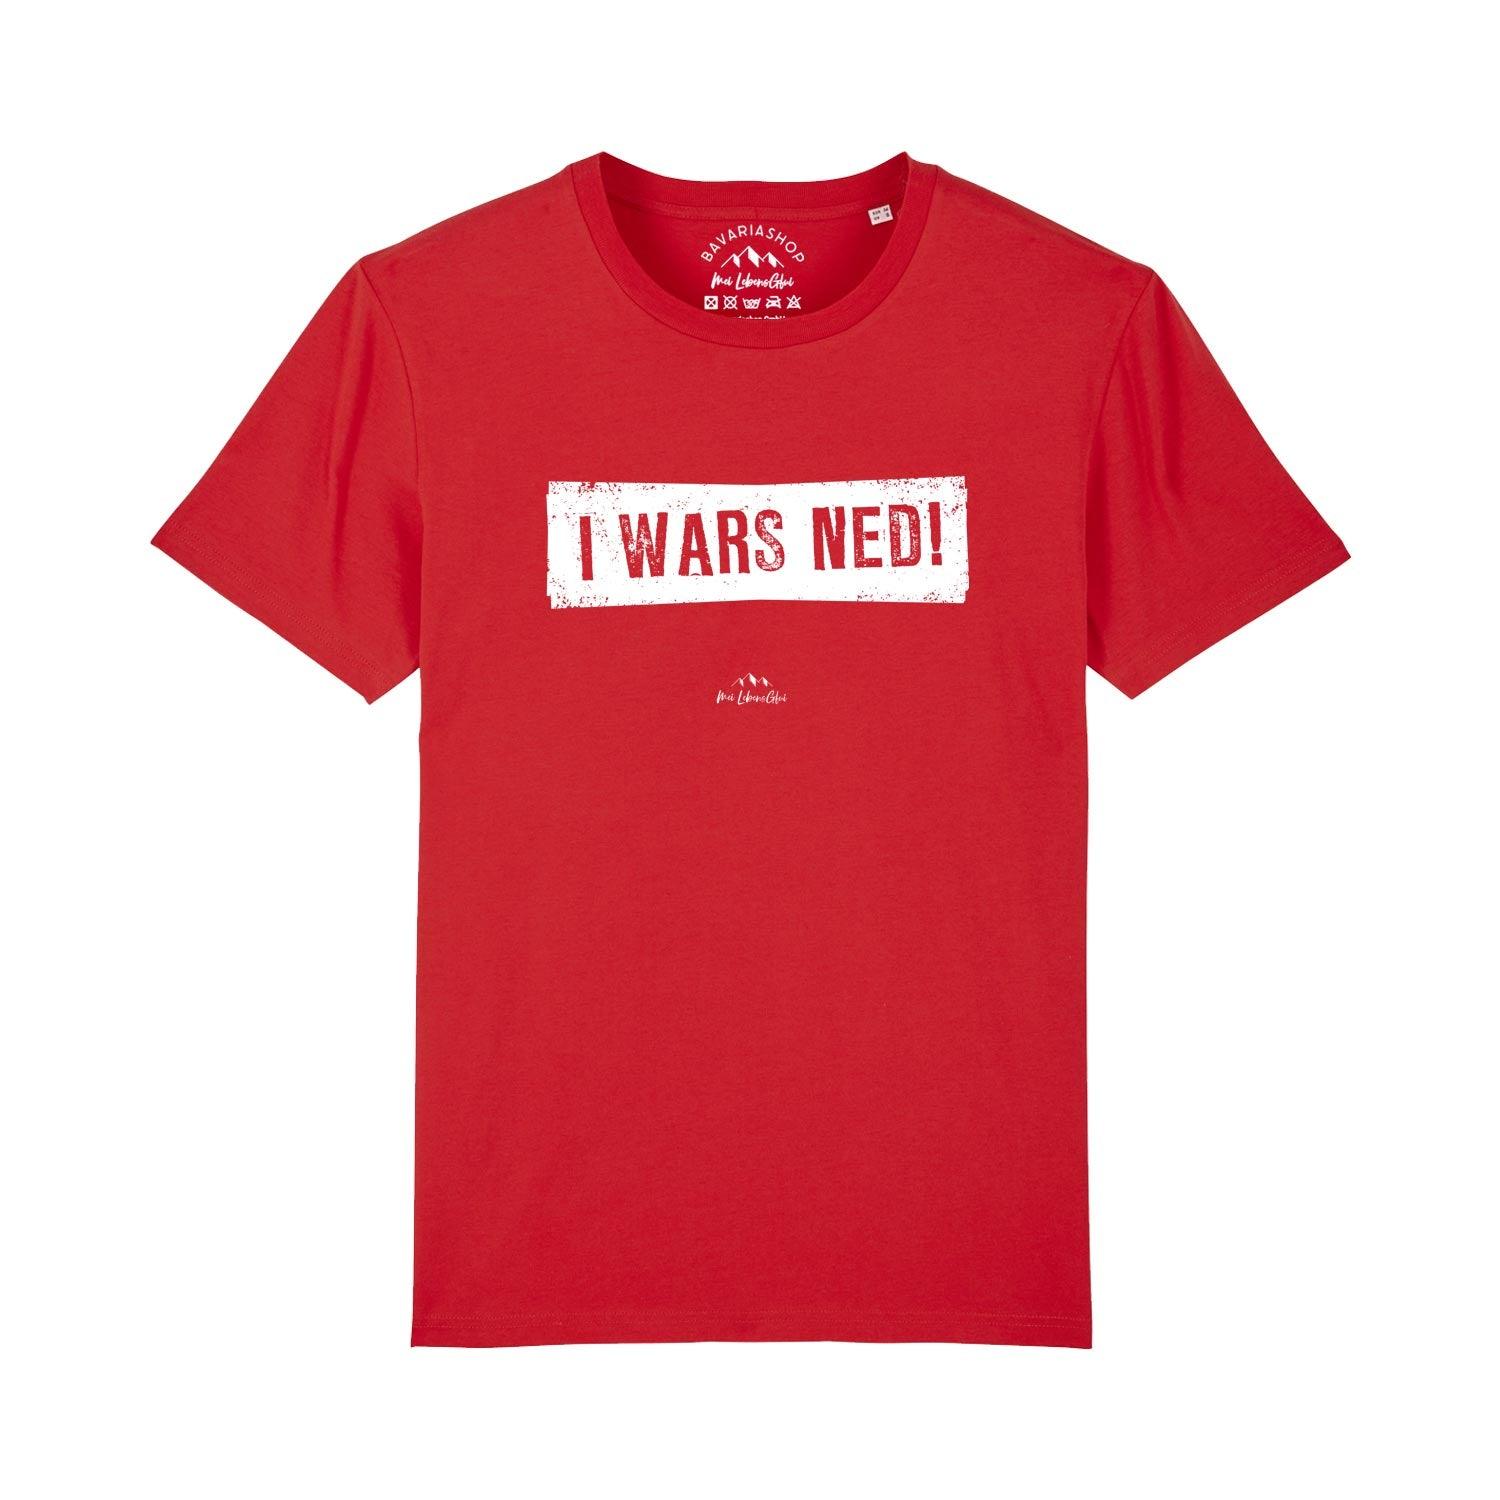 Herren T-Shirt "I wars ned!" - bavariashop - mei LebensGfui